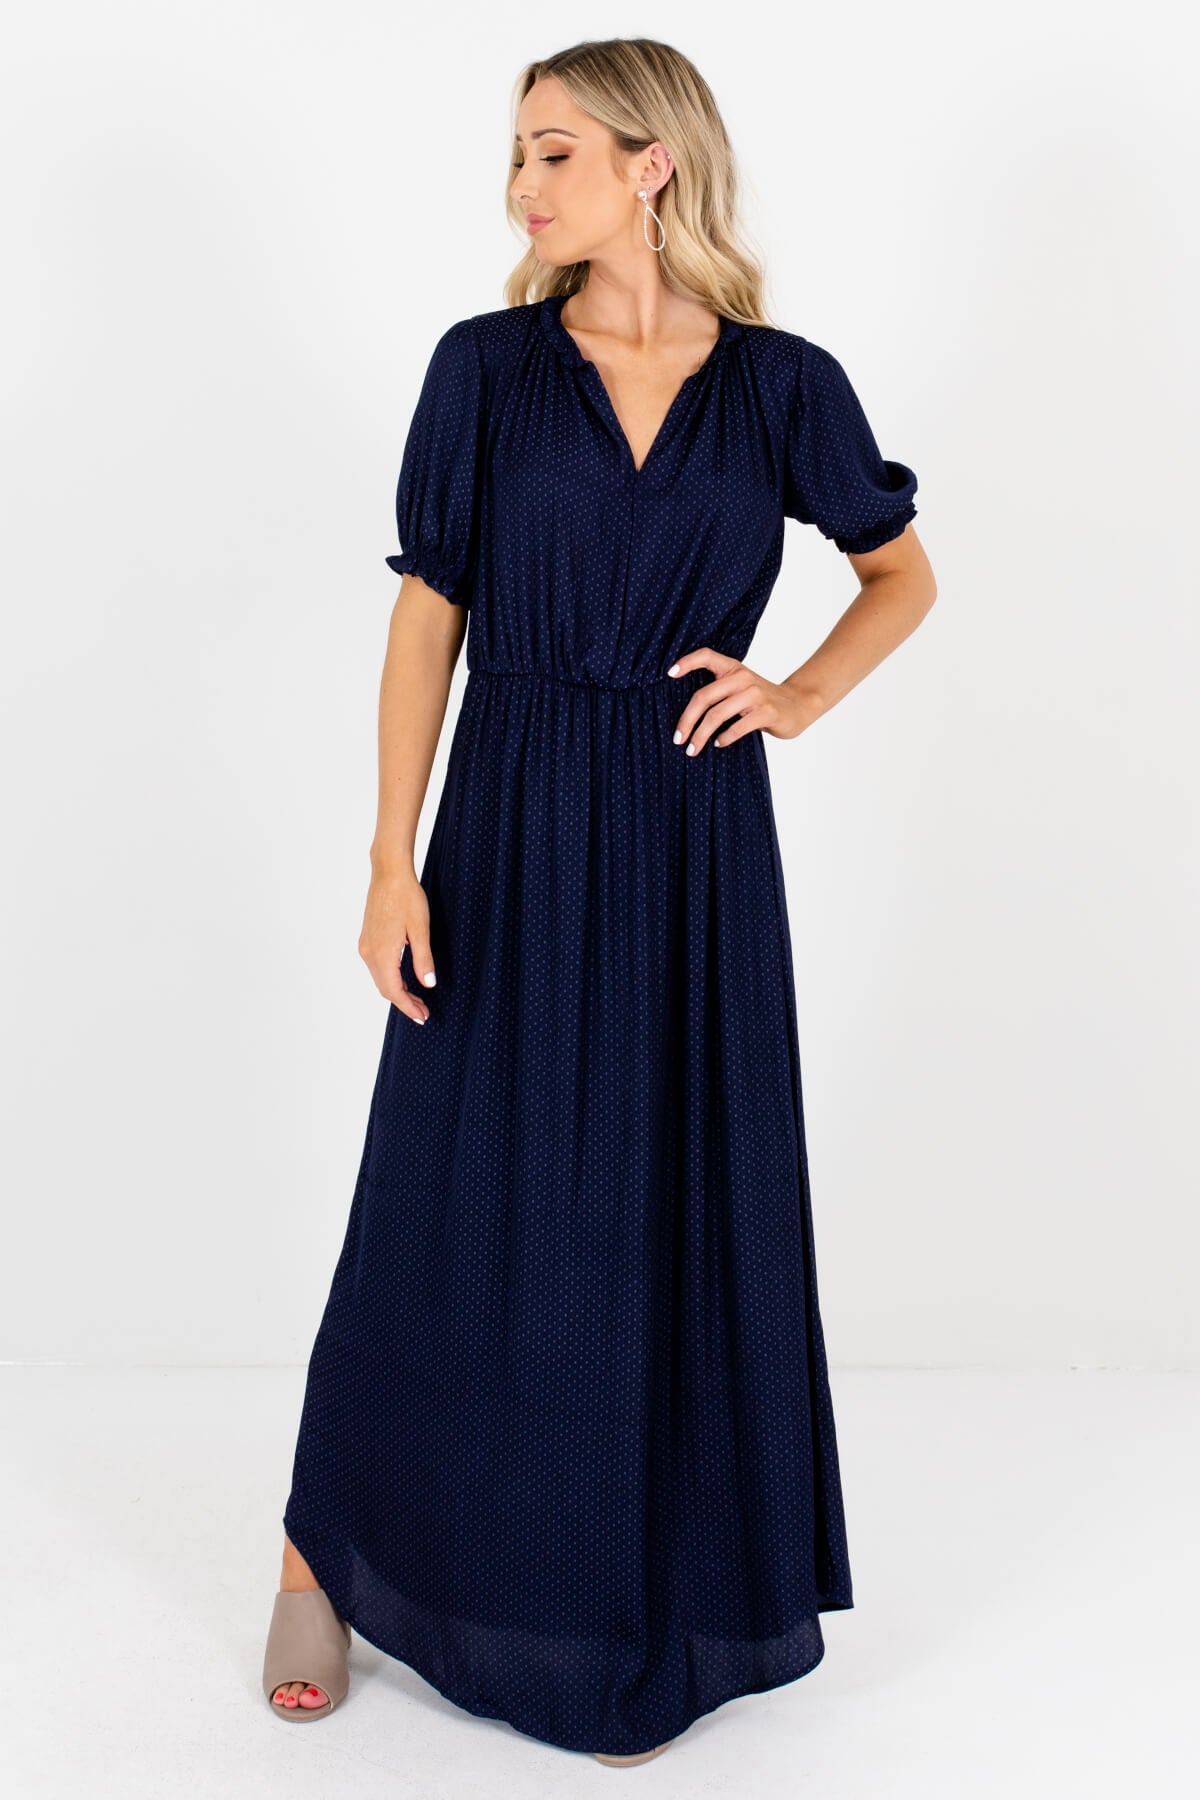 Blue Square Patterned Boutique Maxi Dresses for Women